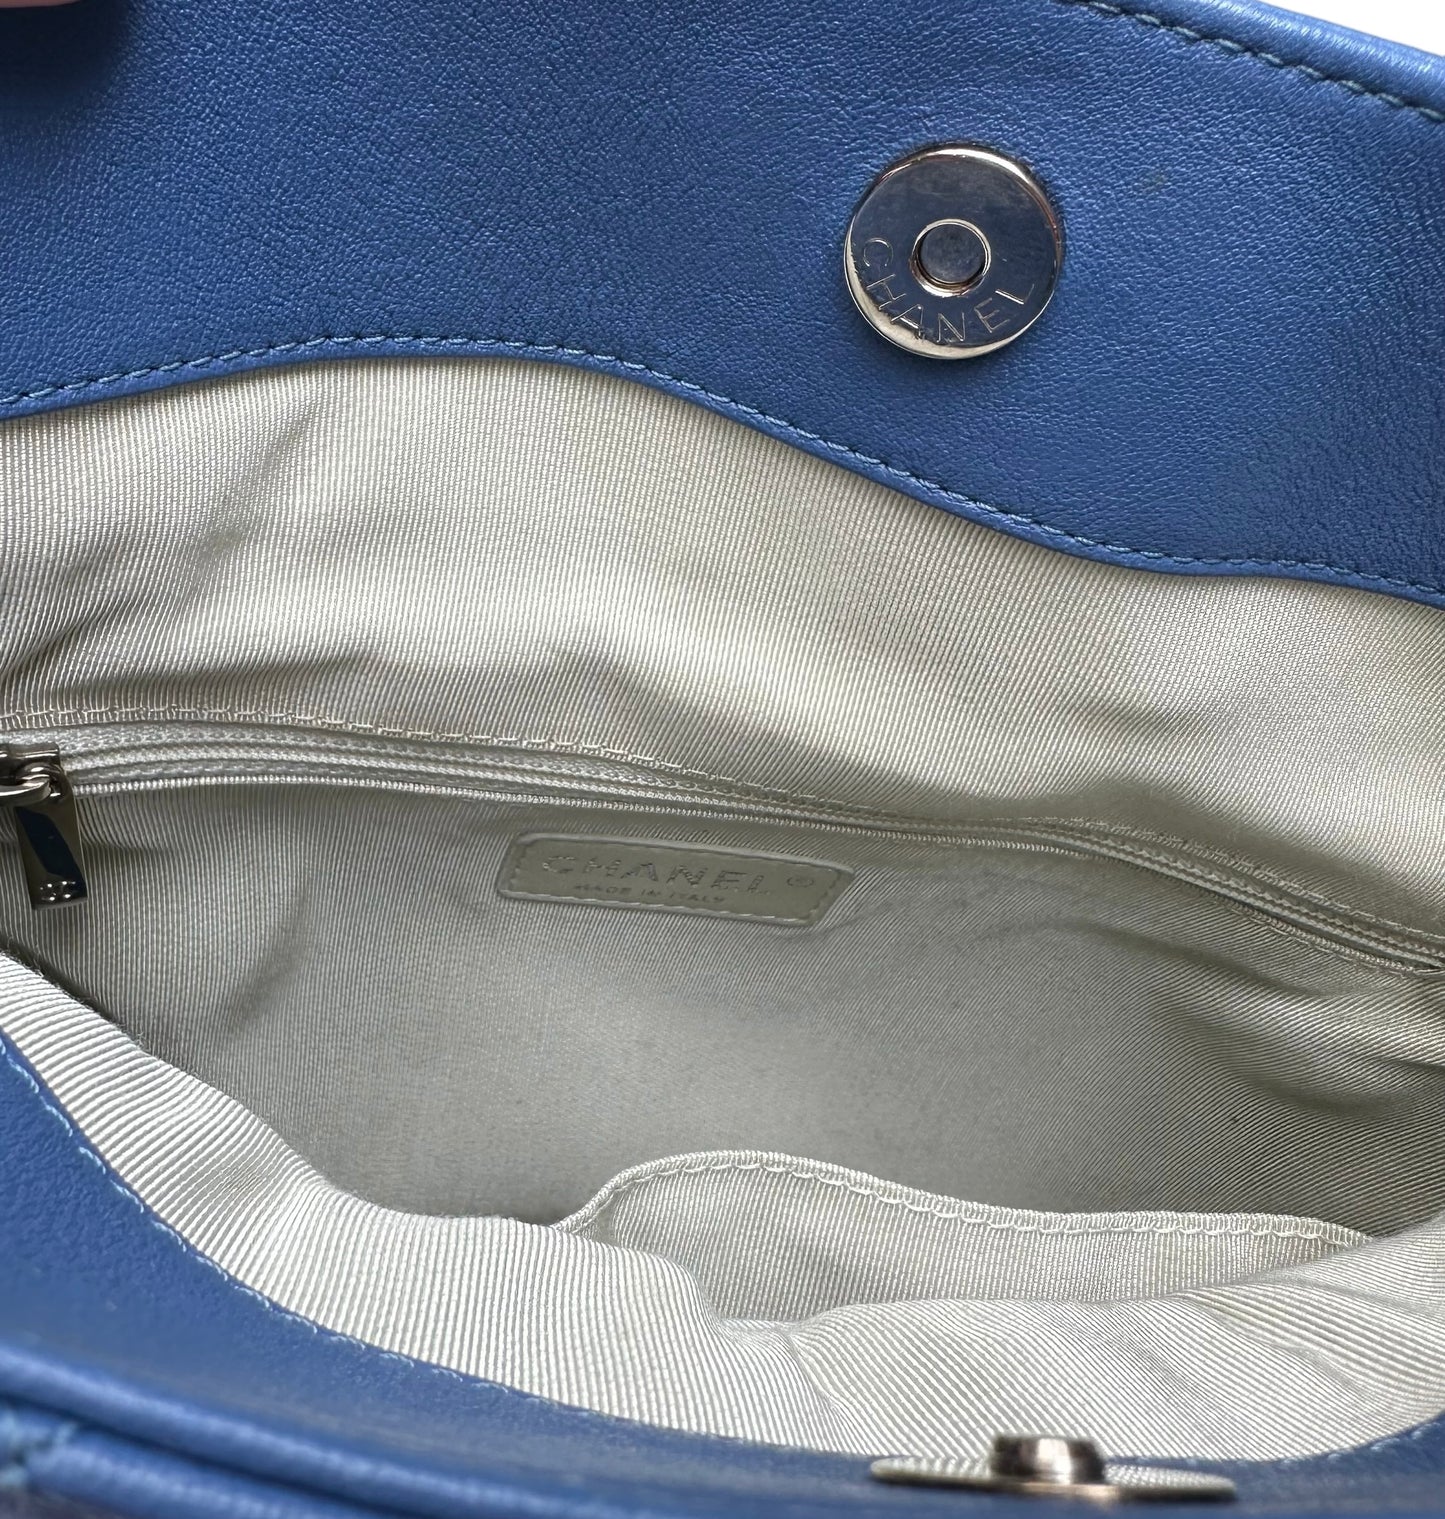 Blue Leather Hobo Bag